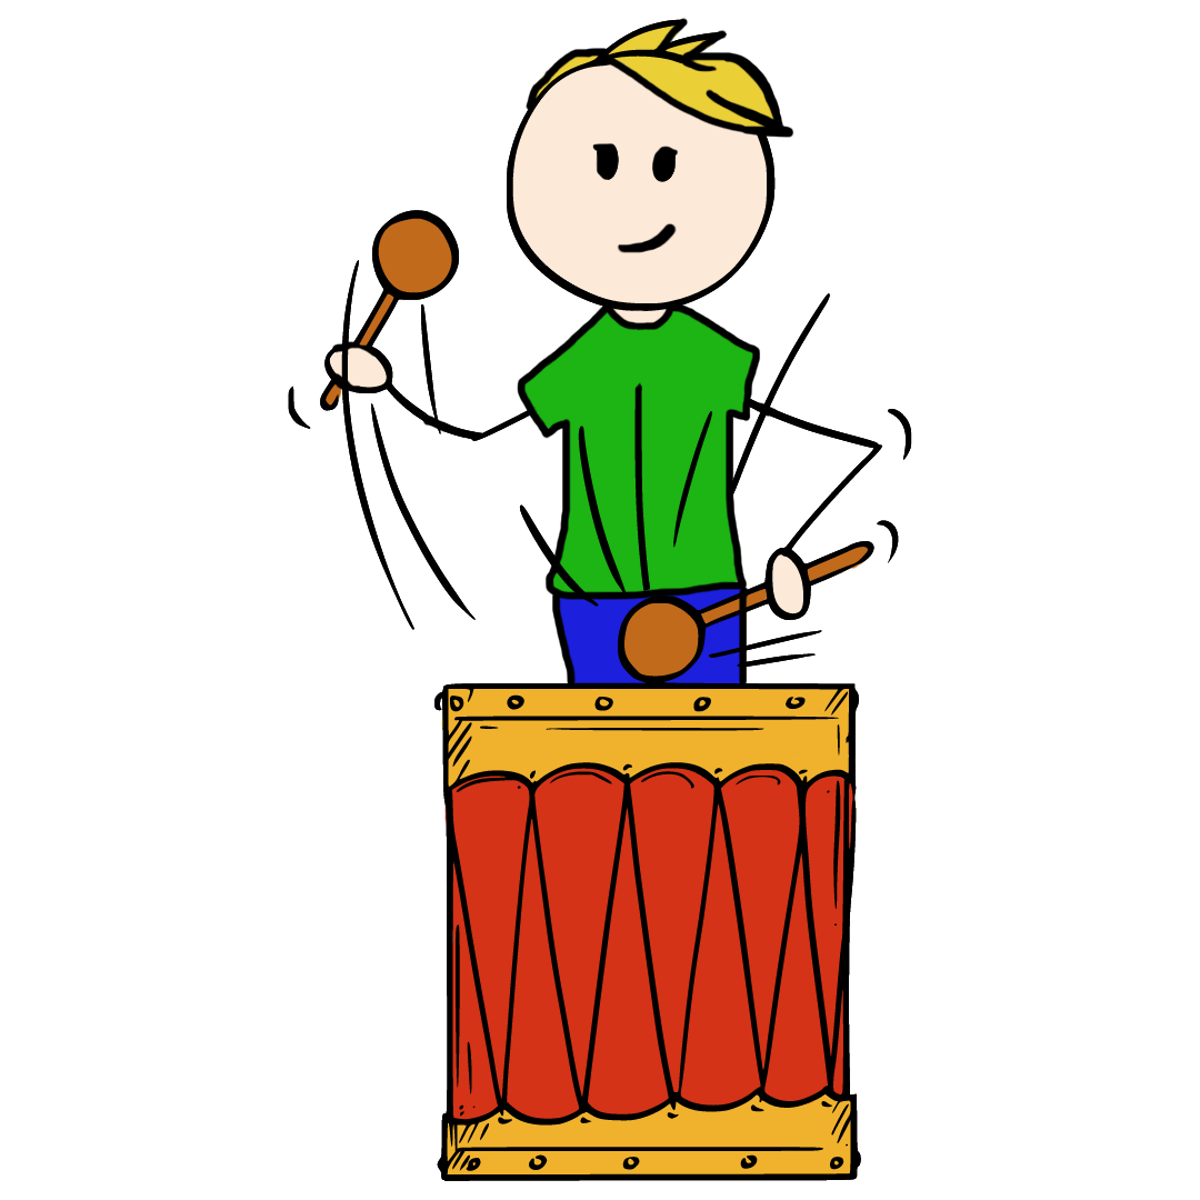 Adult Intermediate or Advanced Drums